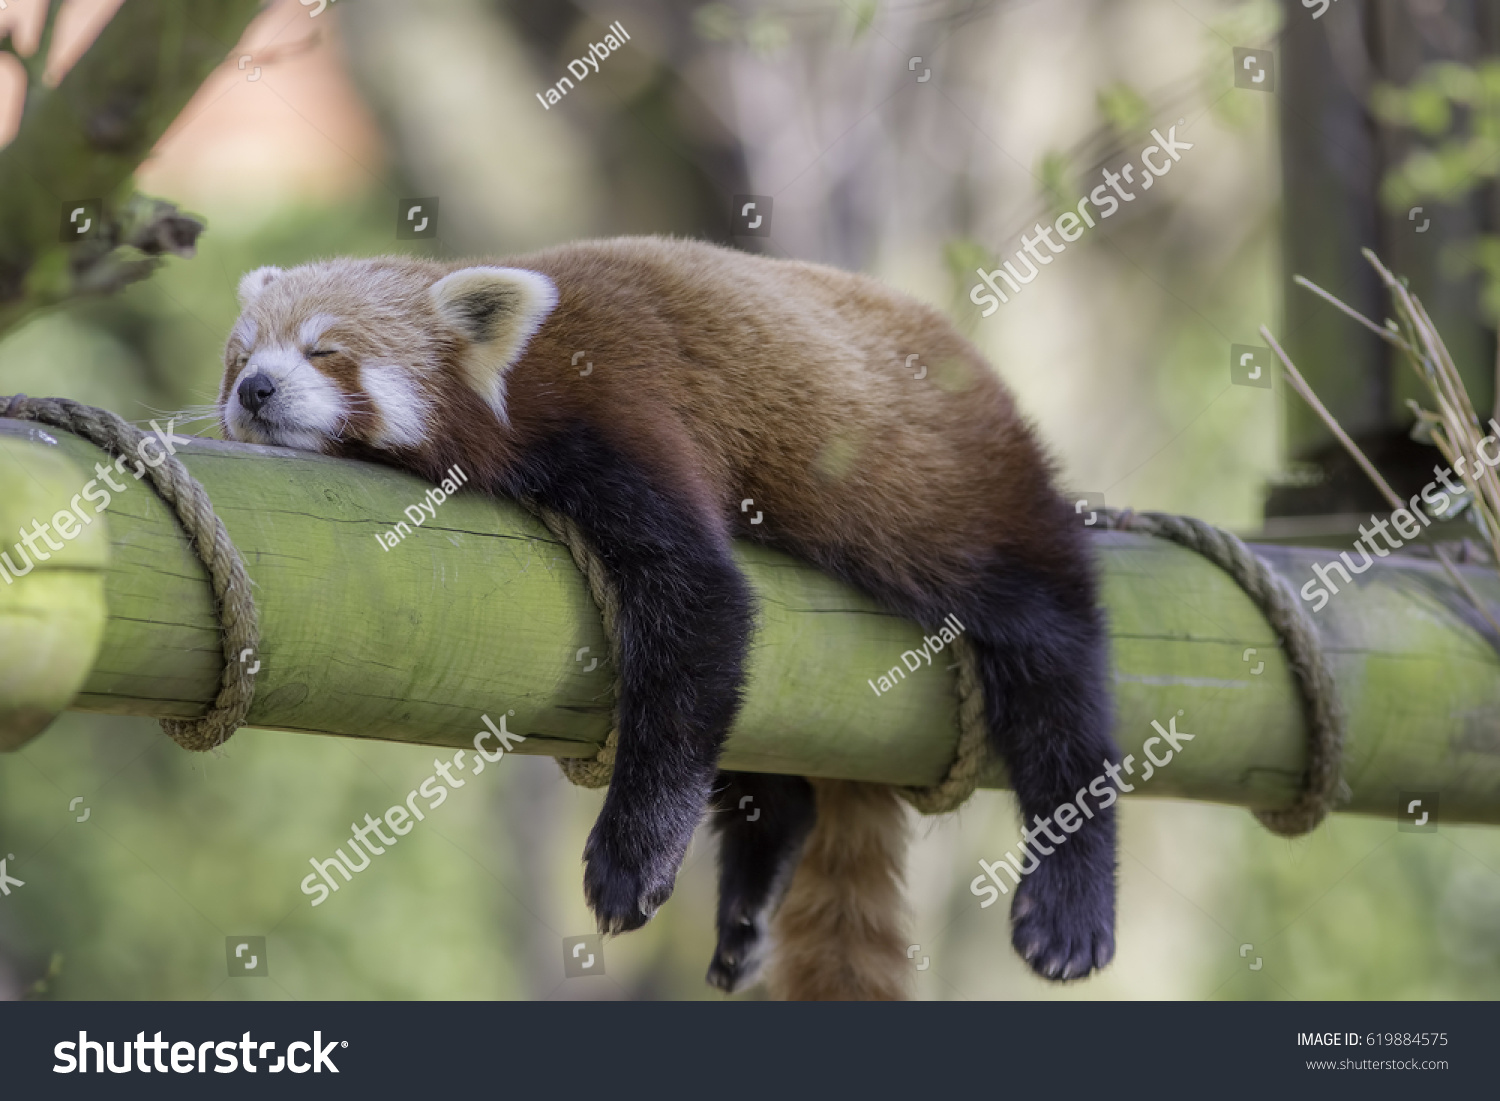 Sleeping Red Panda (Ailurus fulgens). Funny cute animal image of a red panda asleep during afternoon siesta. #619884575